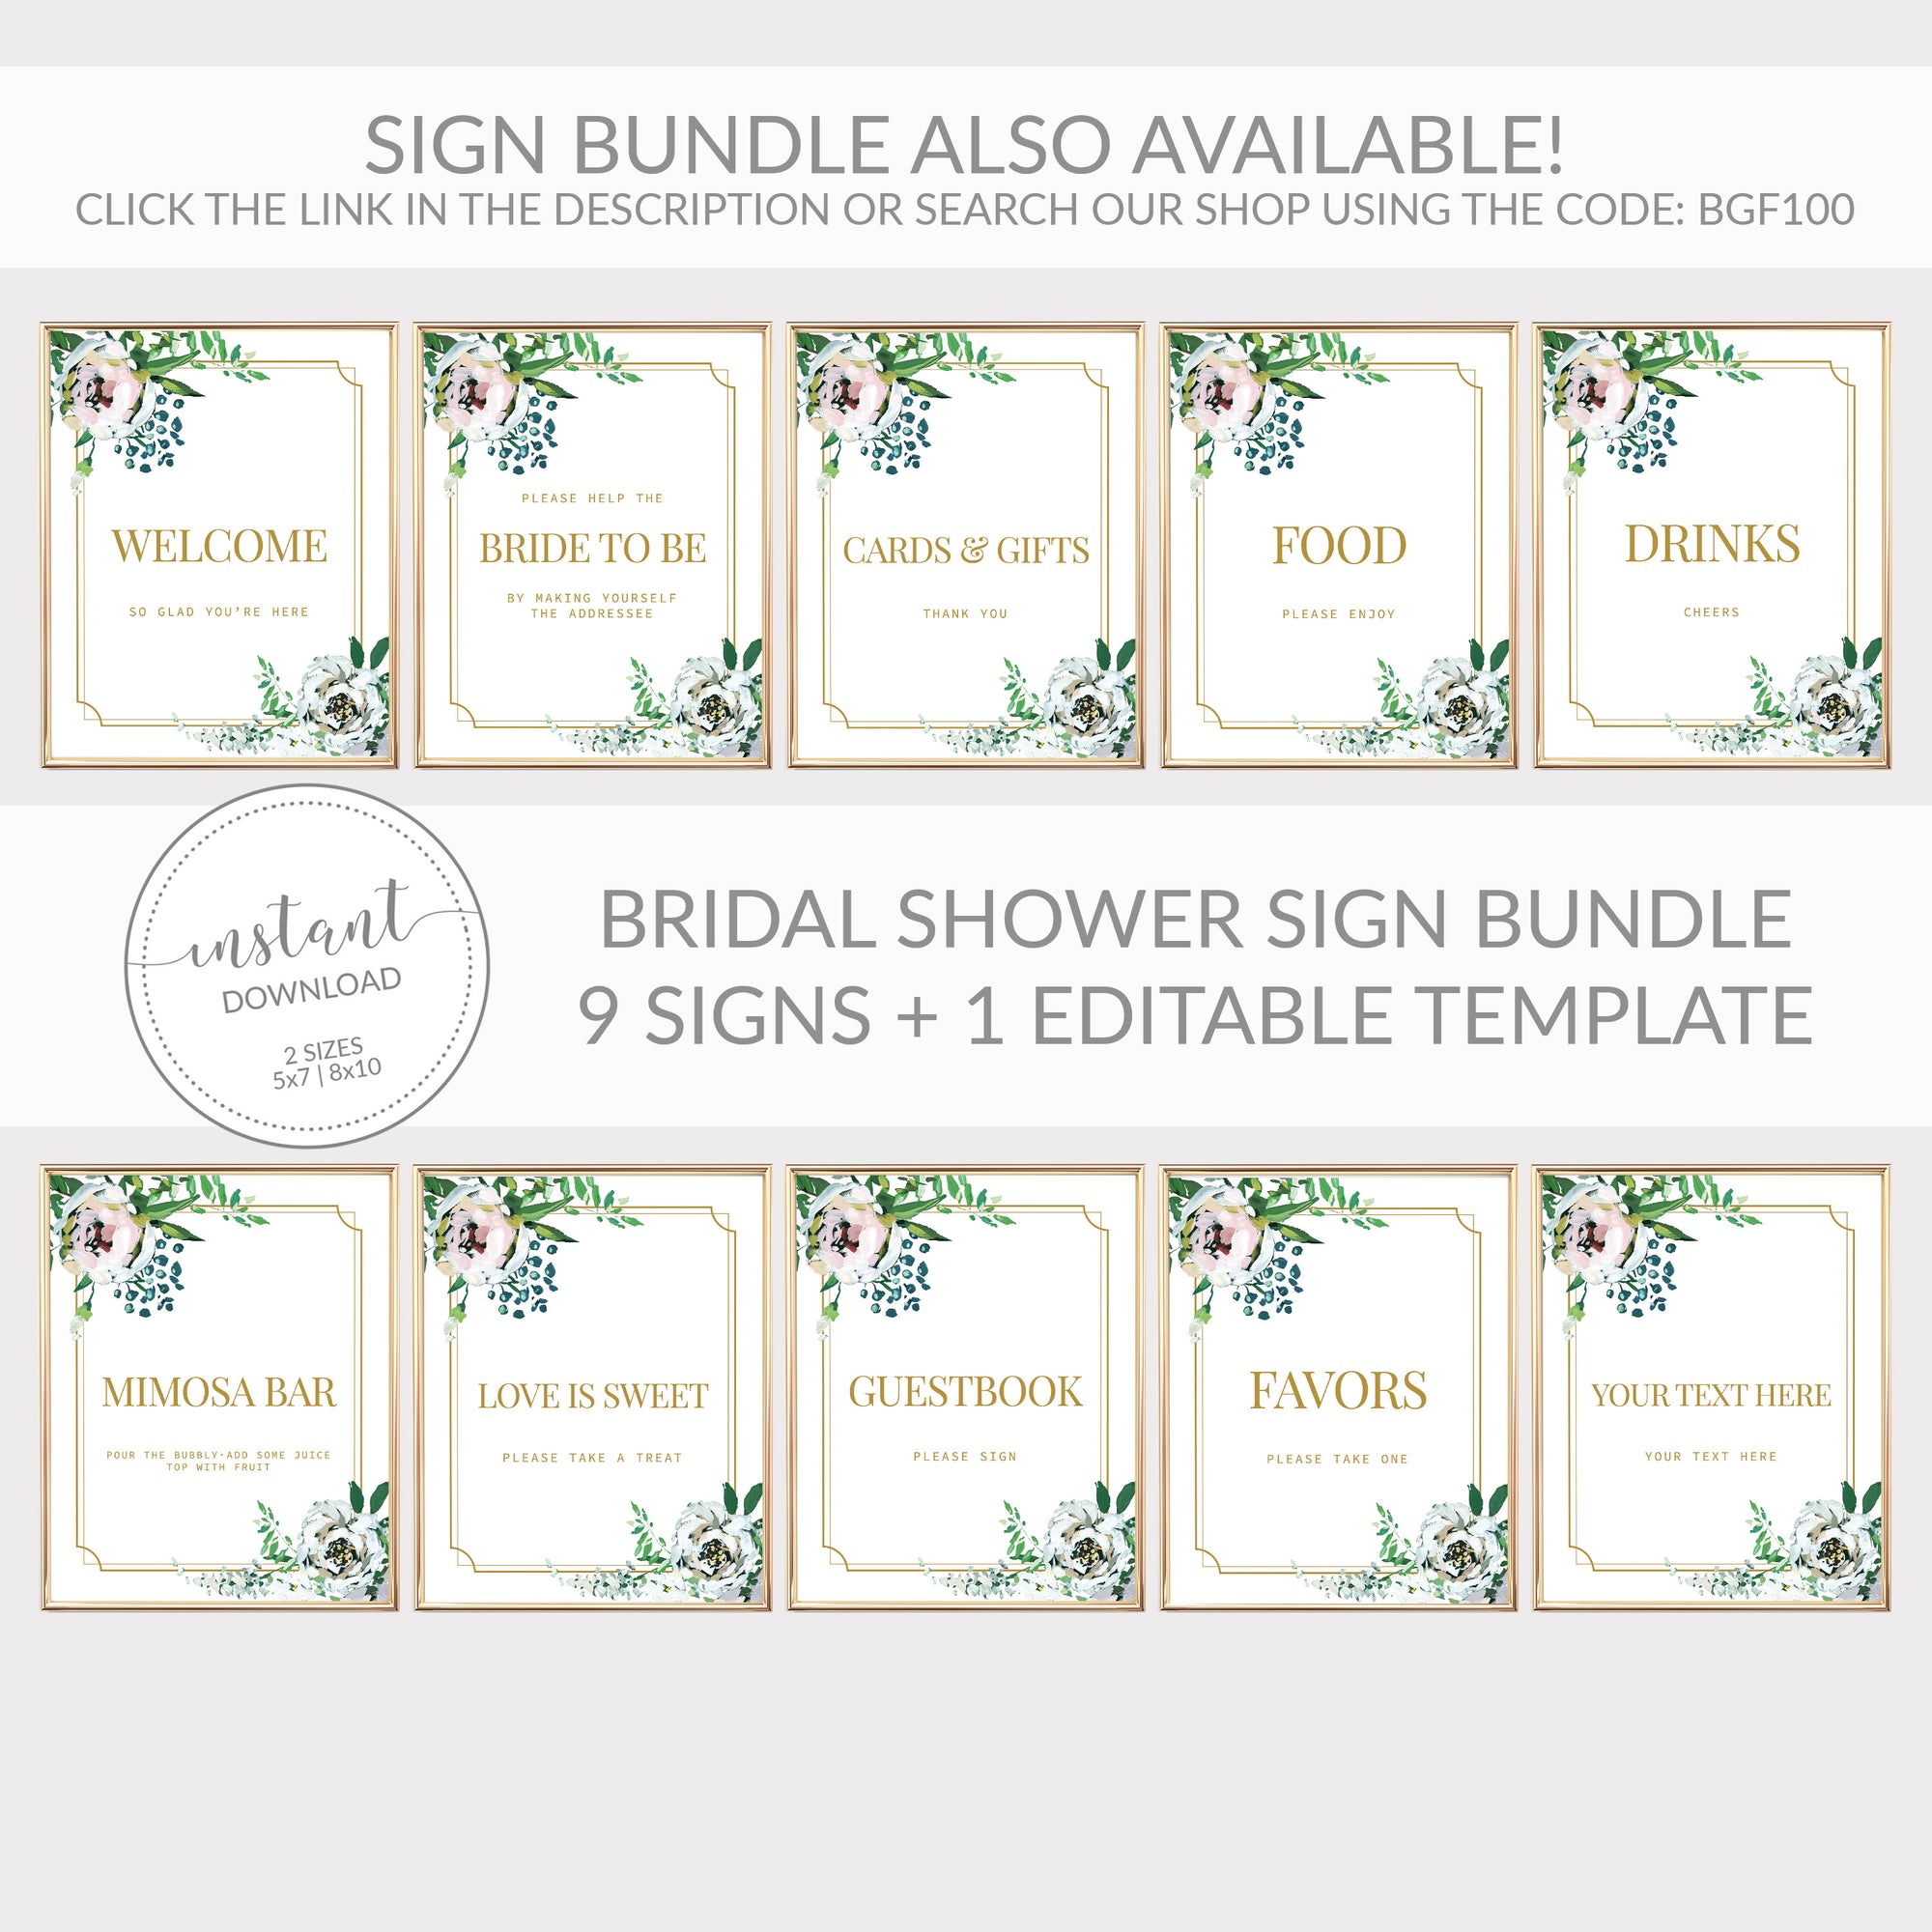 Blush Floral Greenery Favor Sign Printable INSTANT DOWNLOAD, Gold Birthday, Baby Shower, Bridal Shower, Wedding Decoration - BGF100 - @PlumPolkaDot 